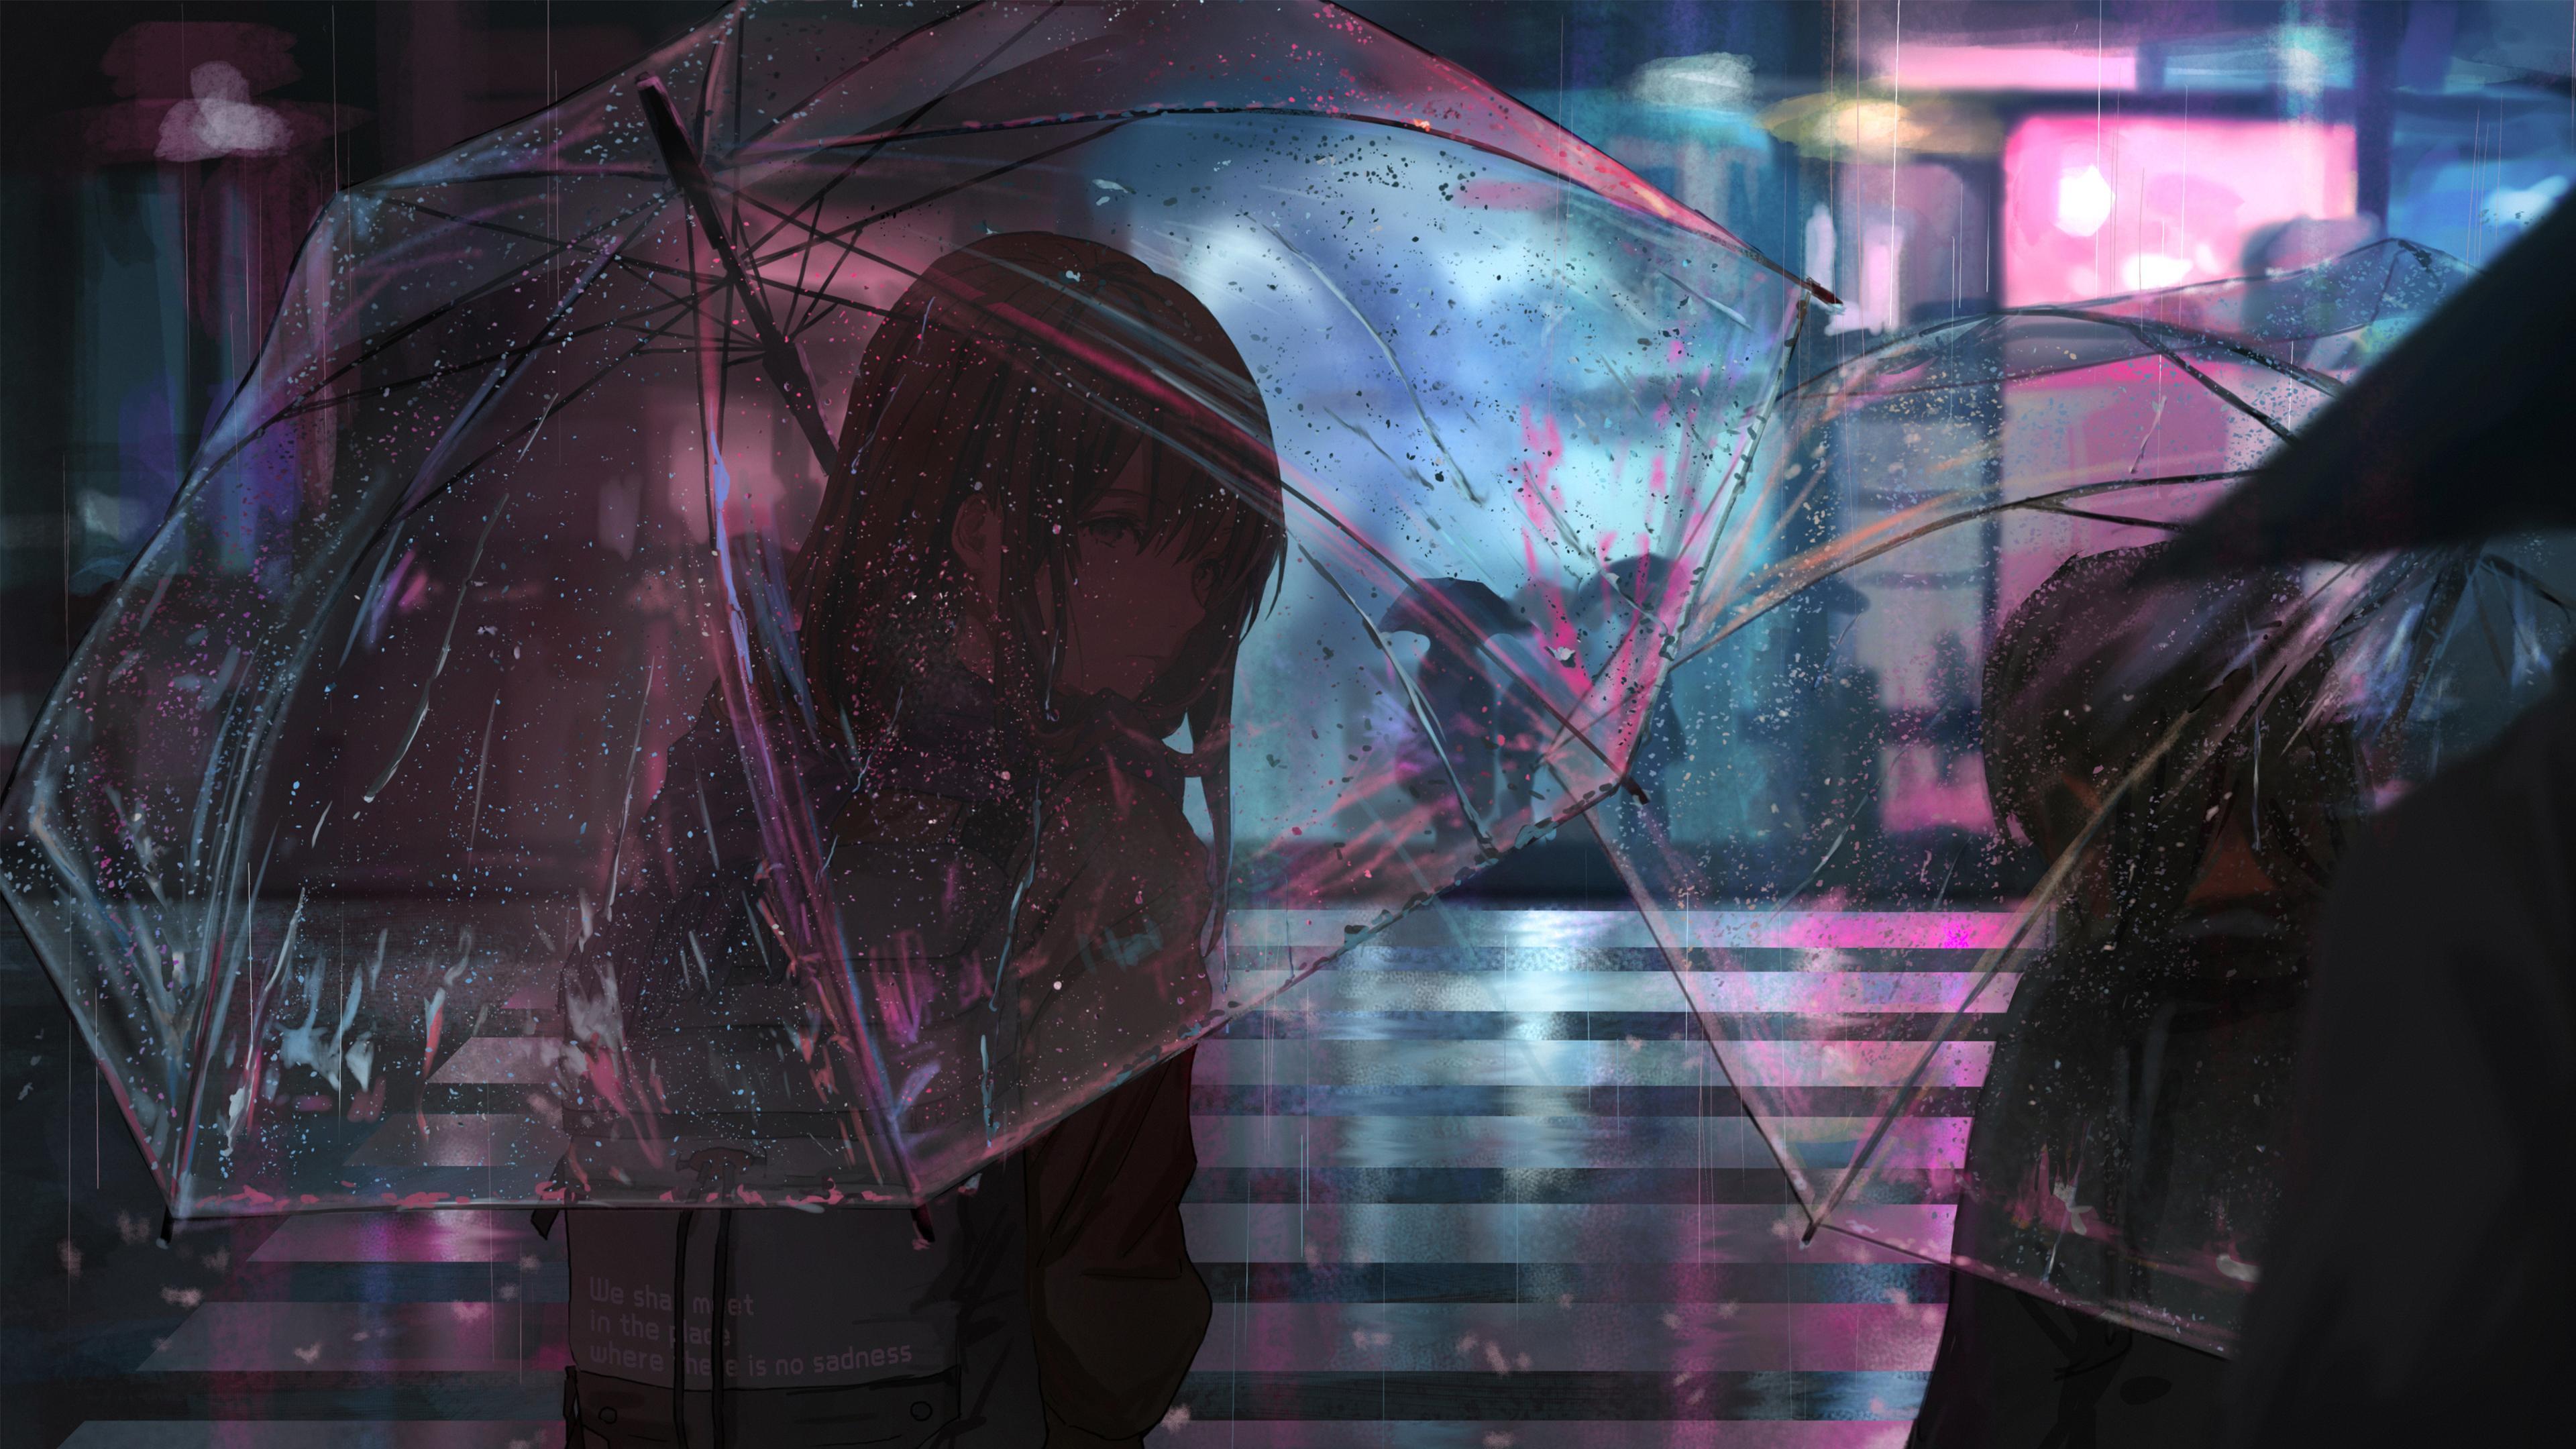 Anime Girl With Umbrella Wallpaper gambar ke 2